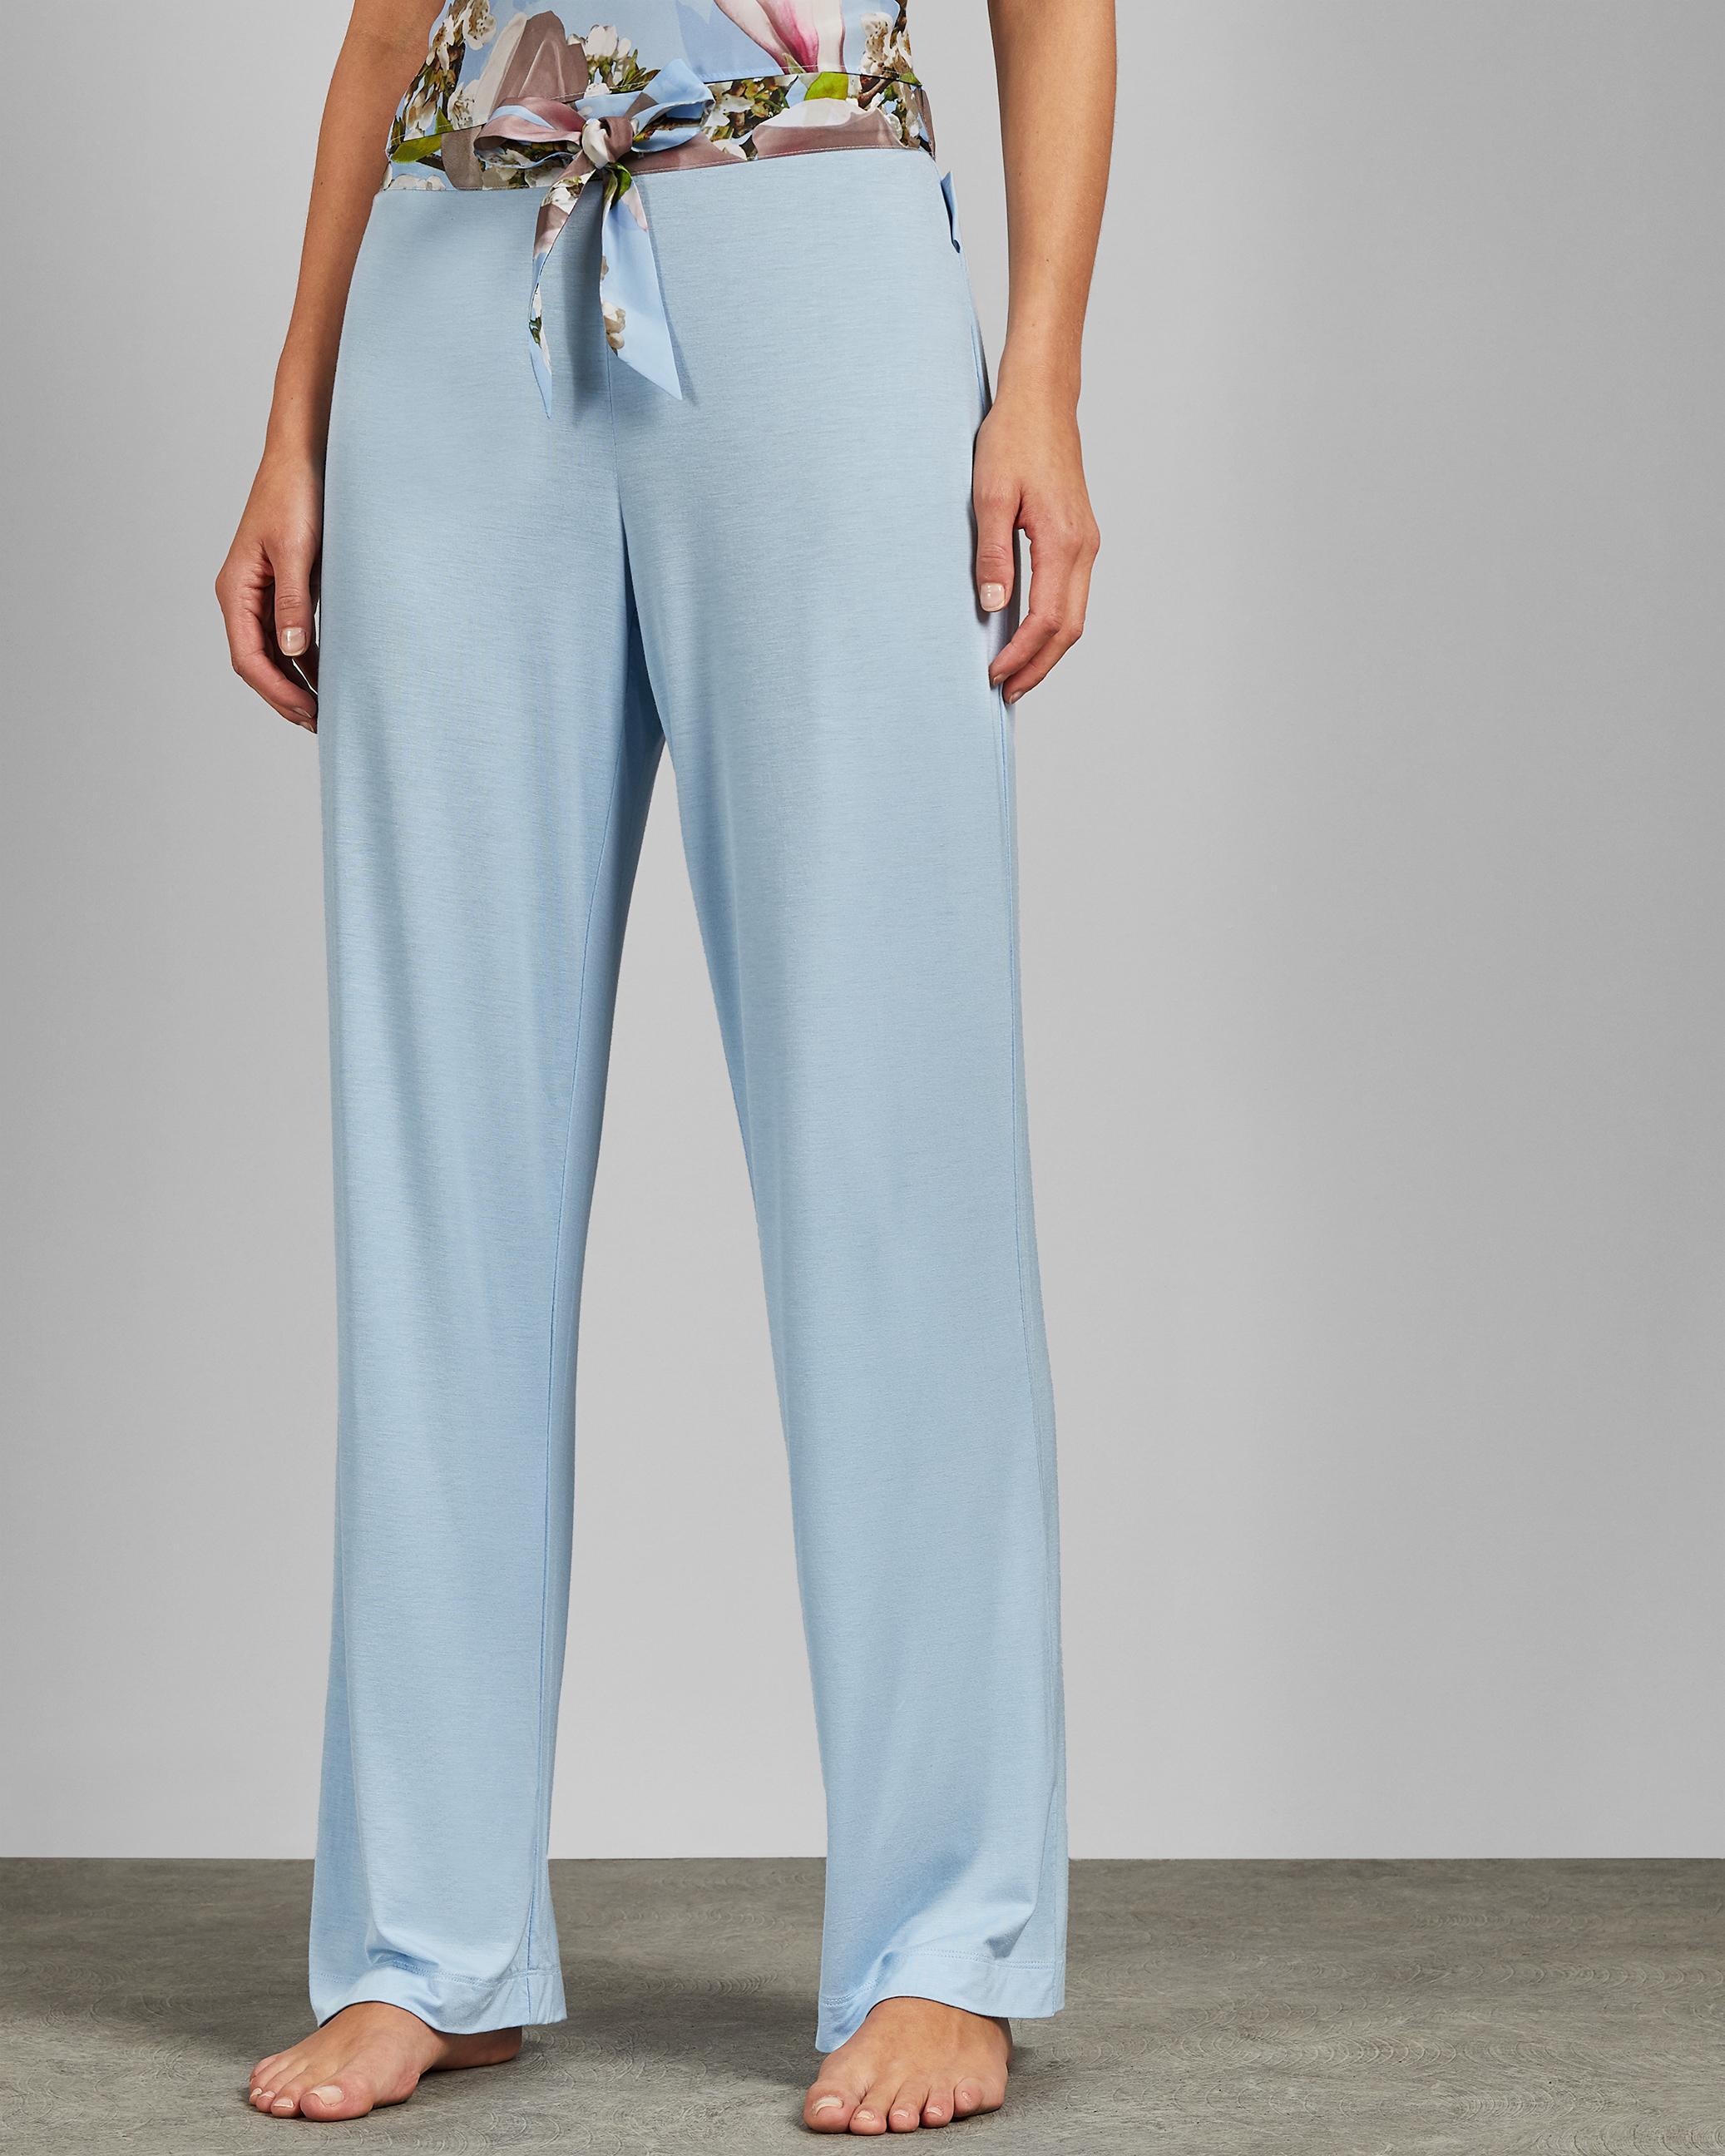 Ted Baker Harmony Pyjama Pants in Light Blue (Blue) - Lyst